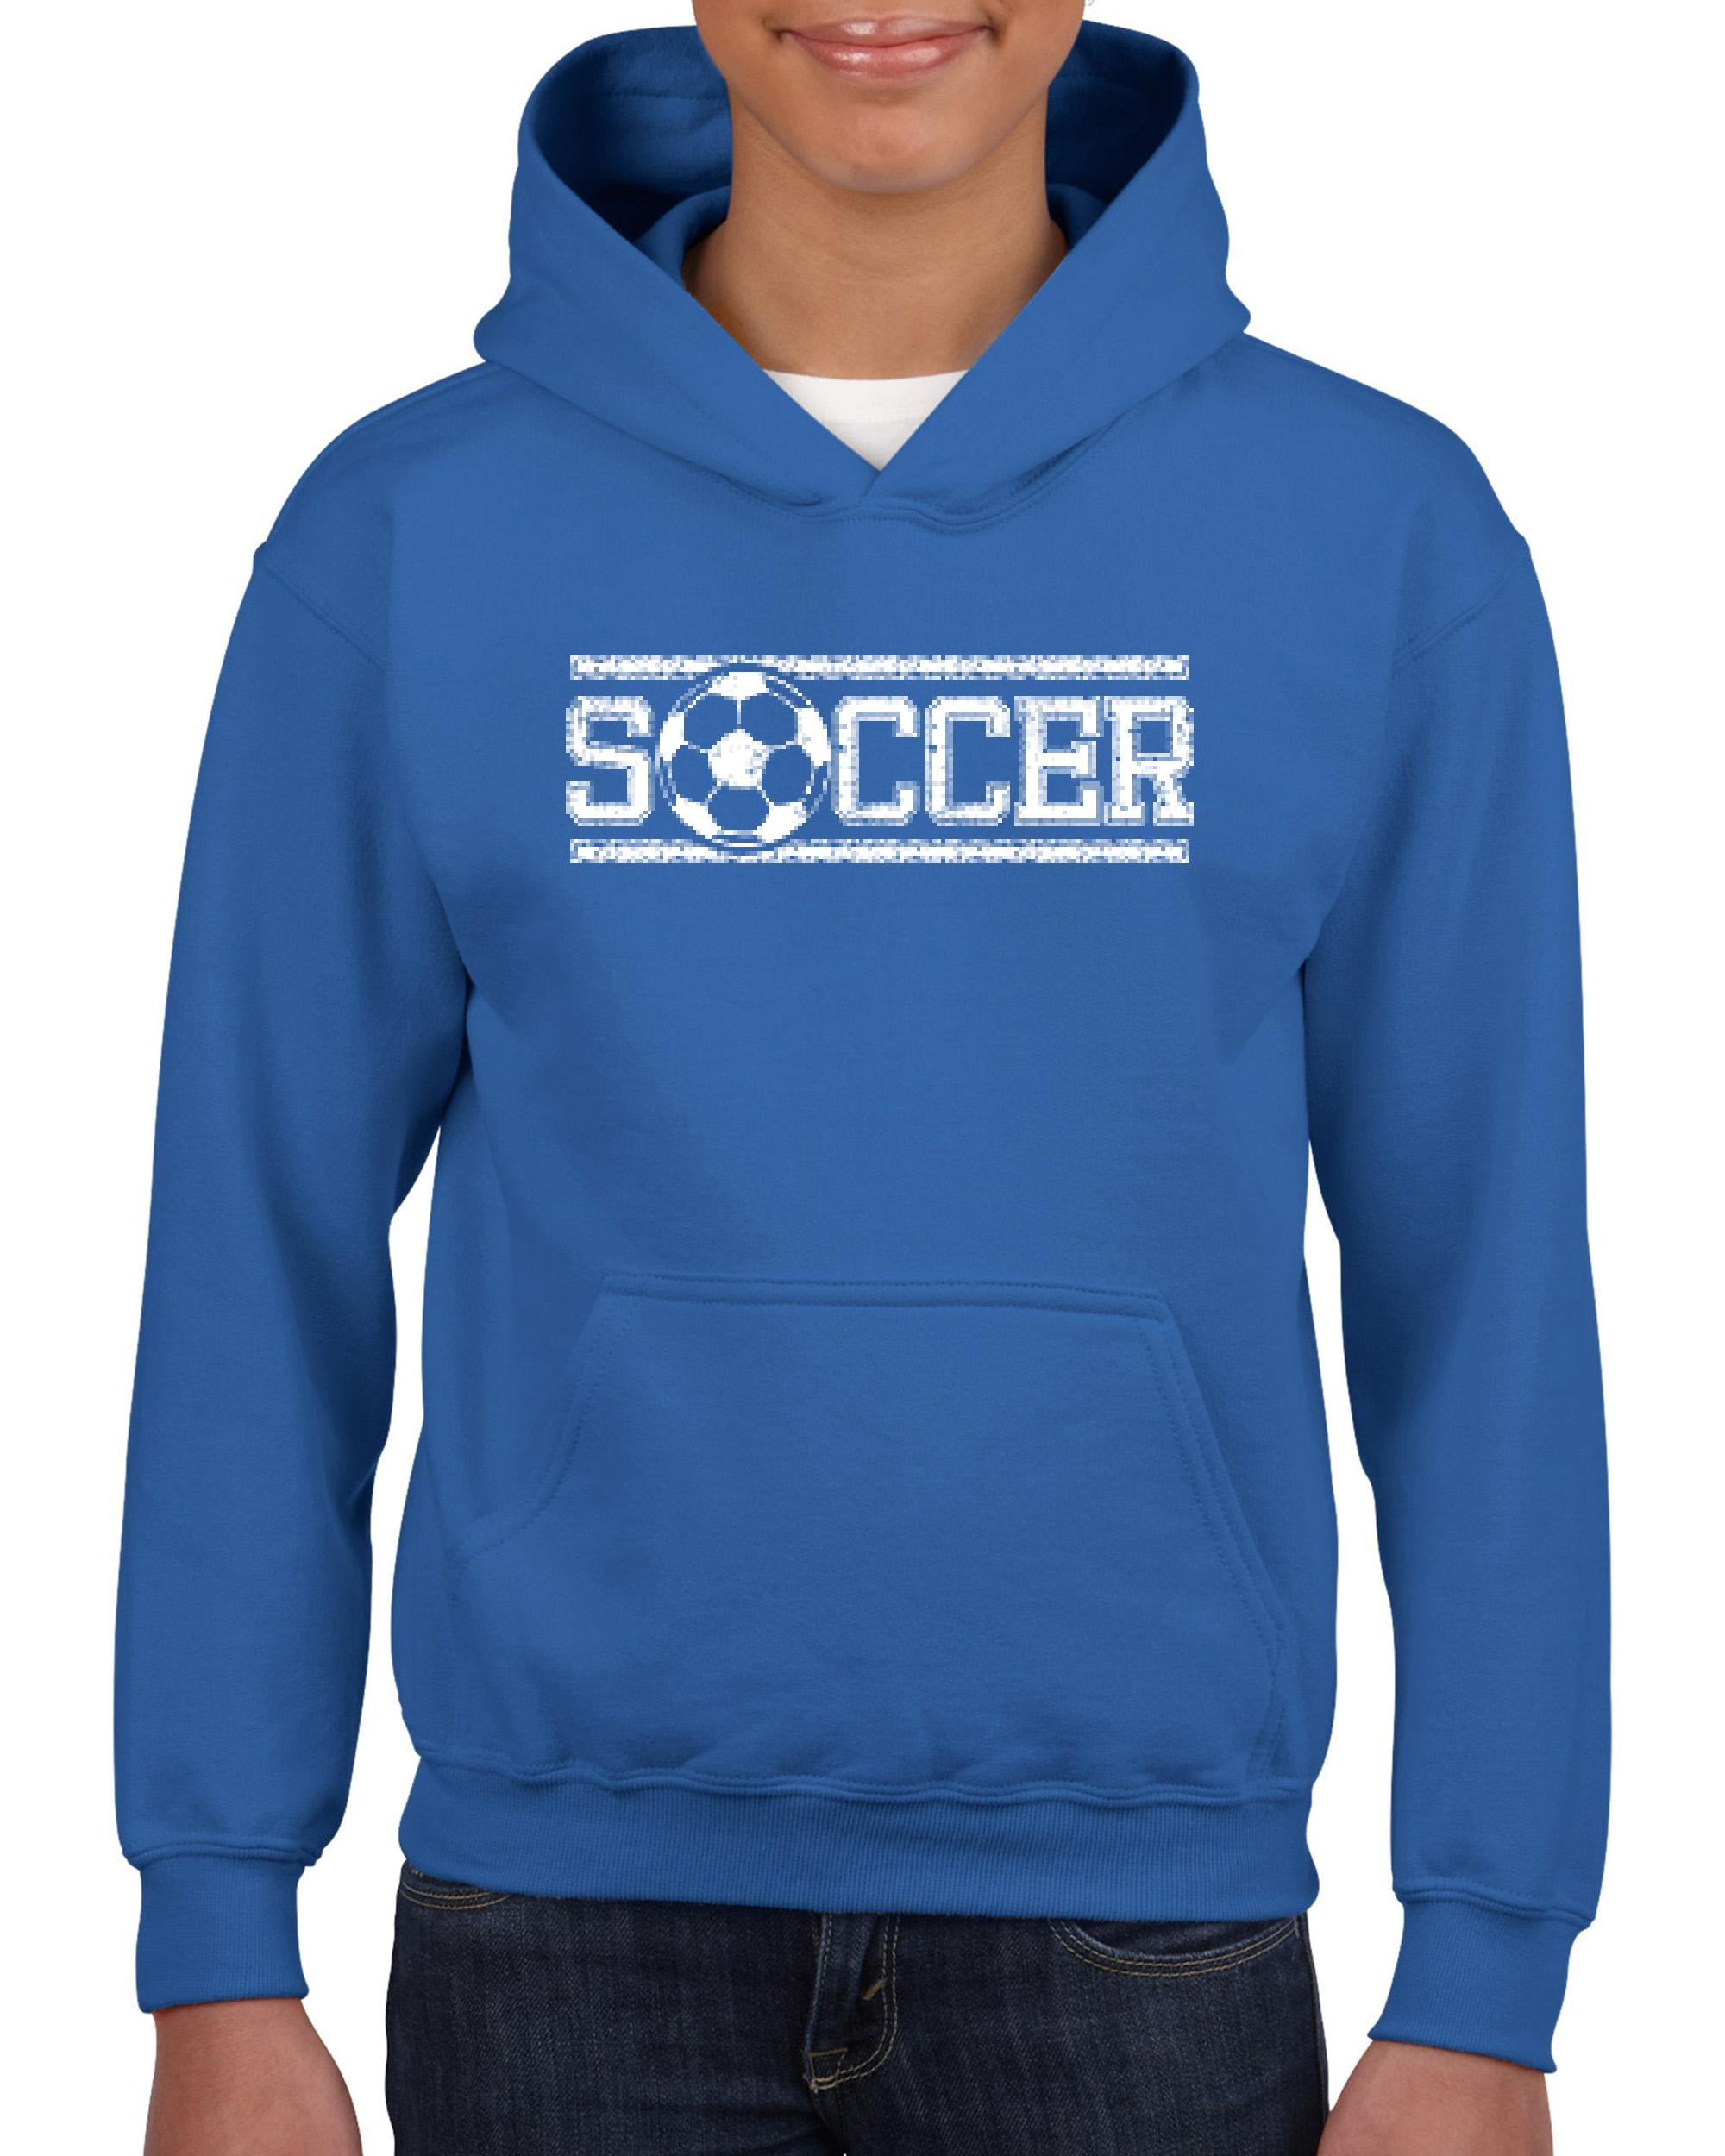 IWPF - Big Boys Hoodies and Sweatshirts - Soccer With Ball - Walmart.com